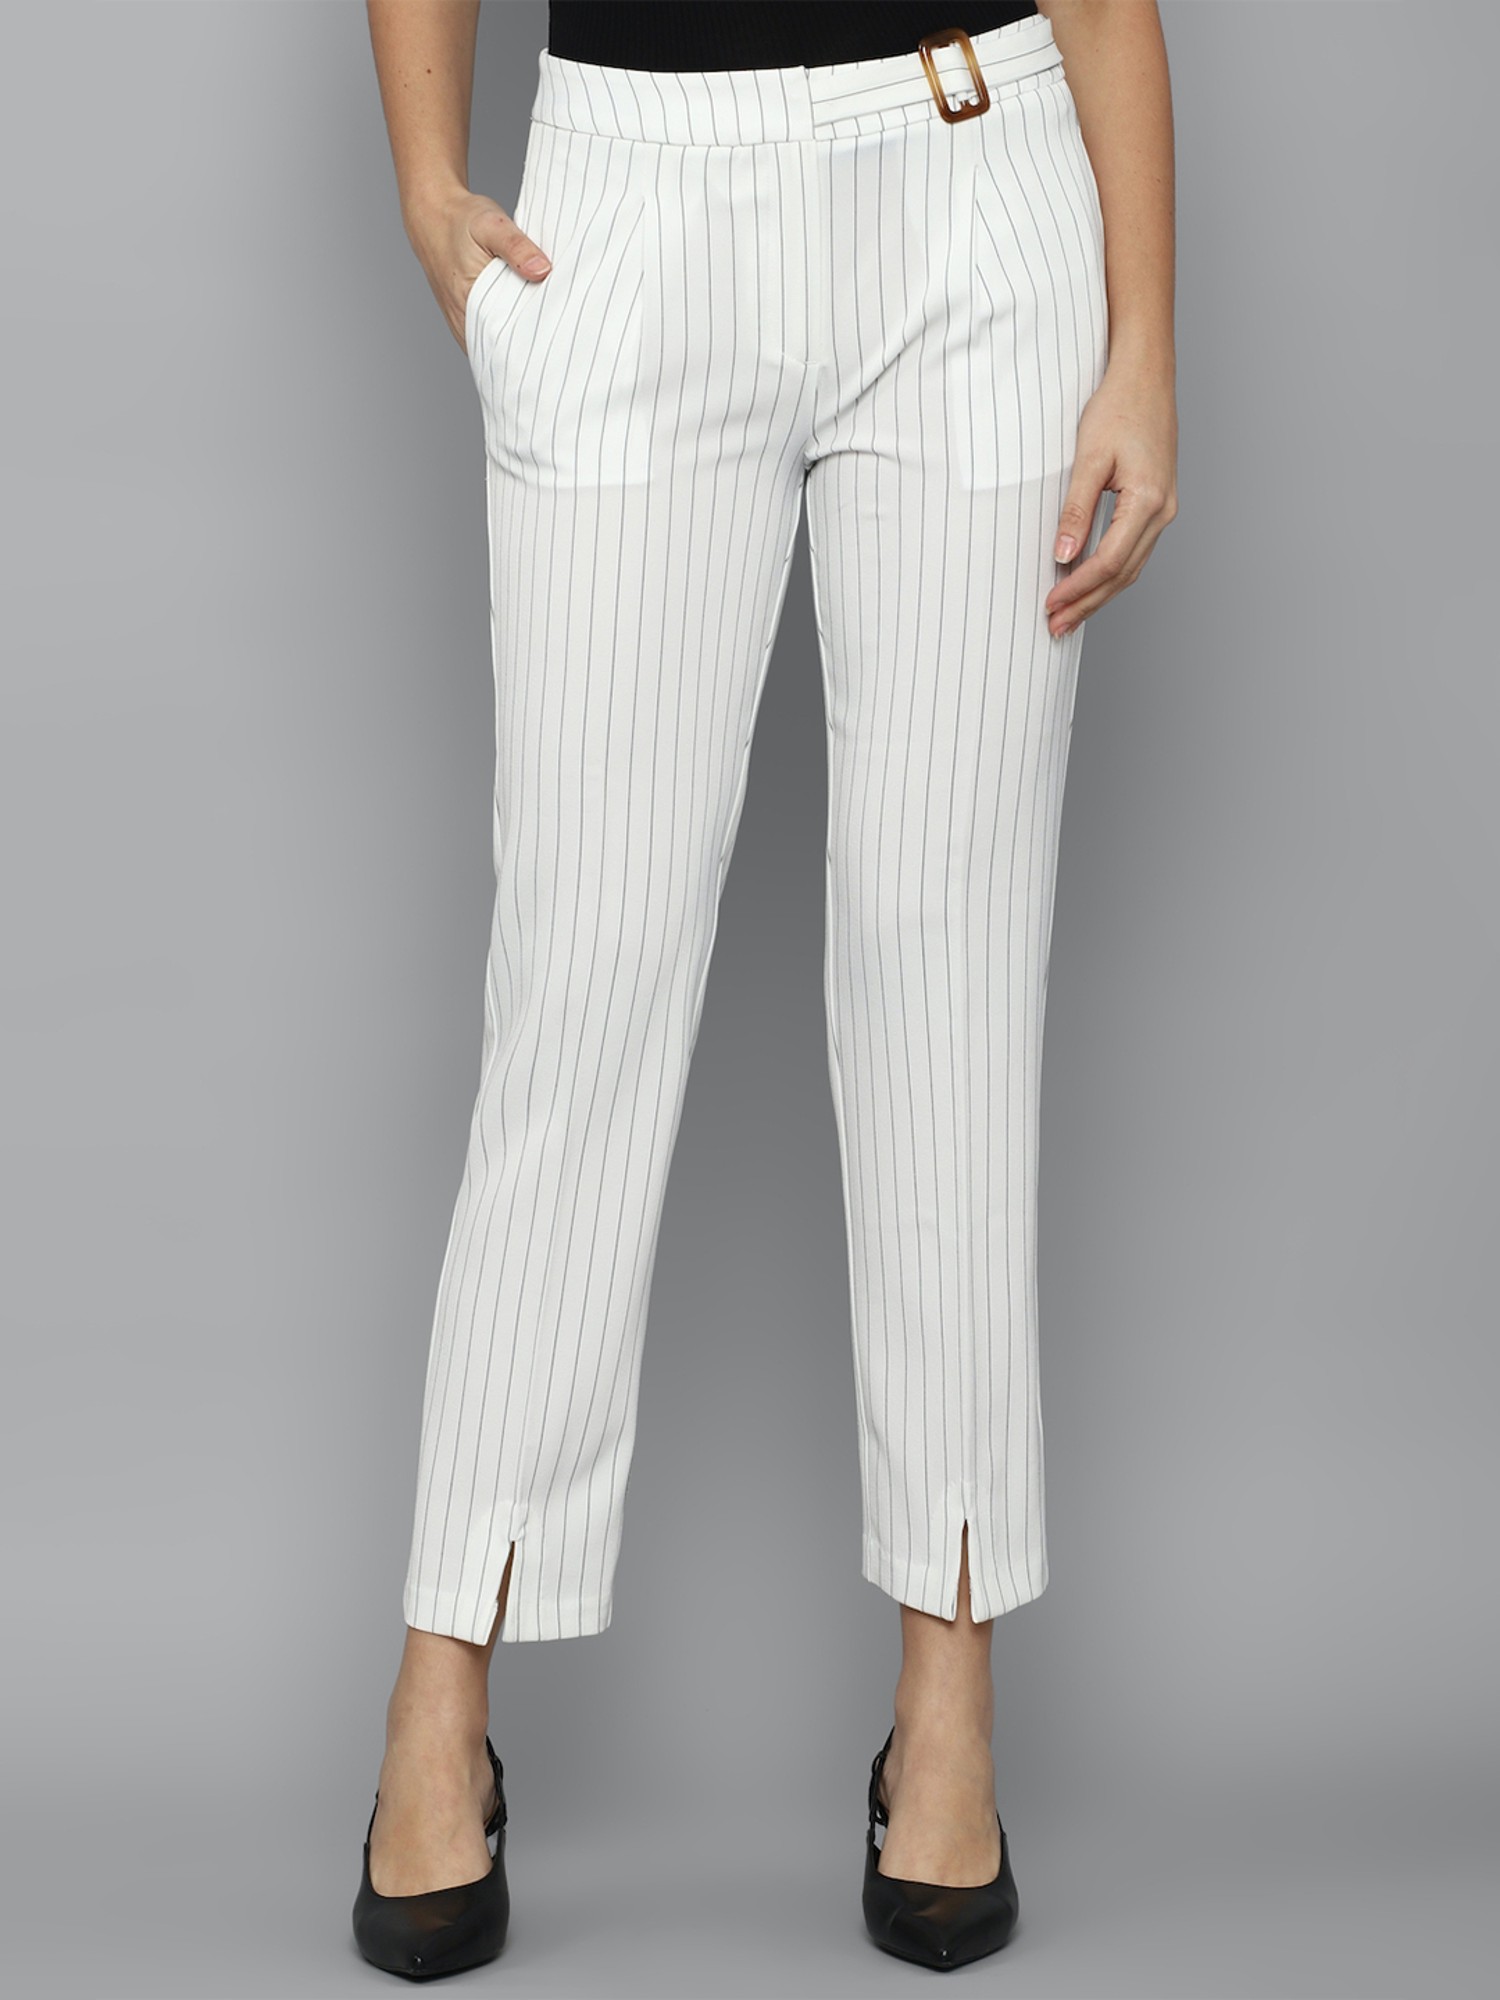 Buy Grey Trousers  Pants for Women by COTTINFAB Online  Ajiocom